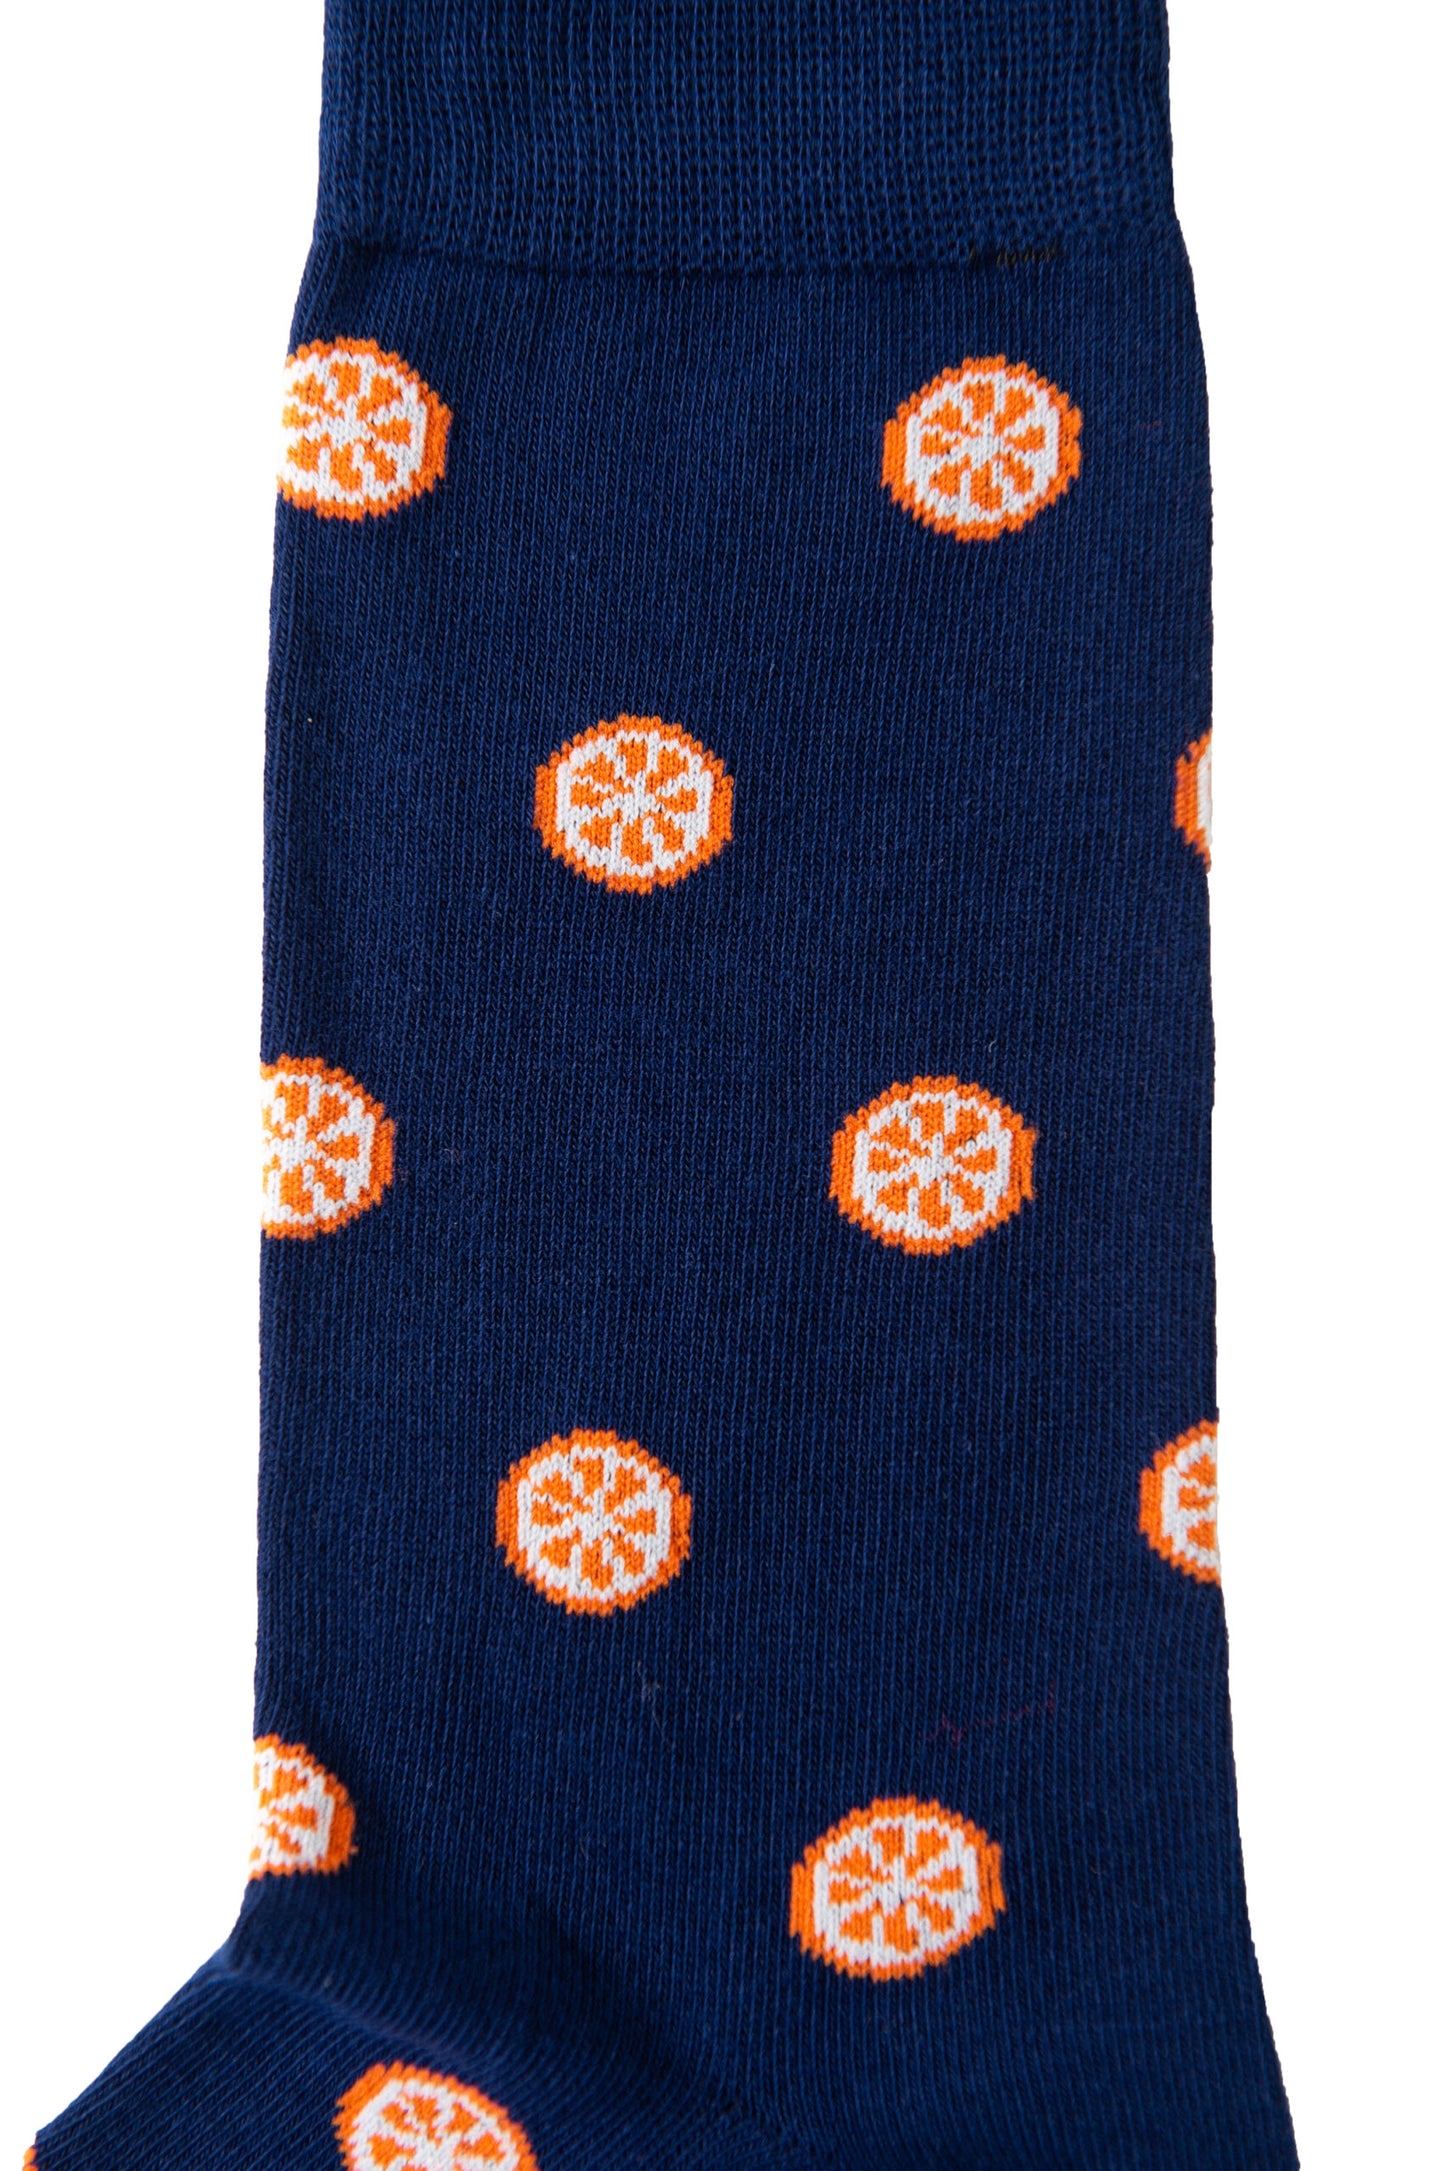 Orange socks with white and orange patterned design, offering heel to toe citrusy comfort.